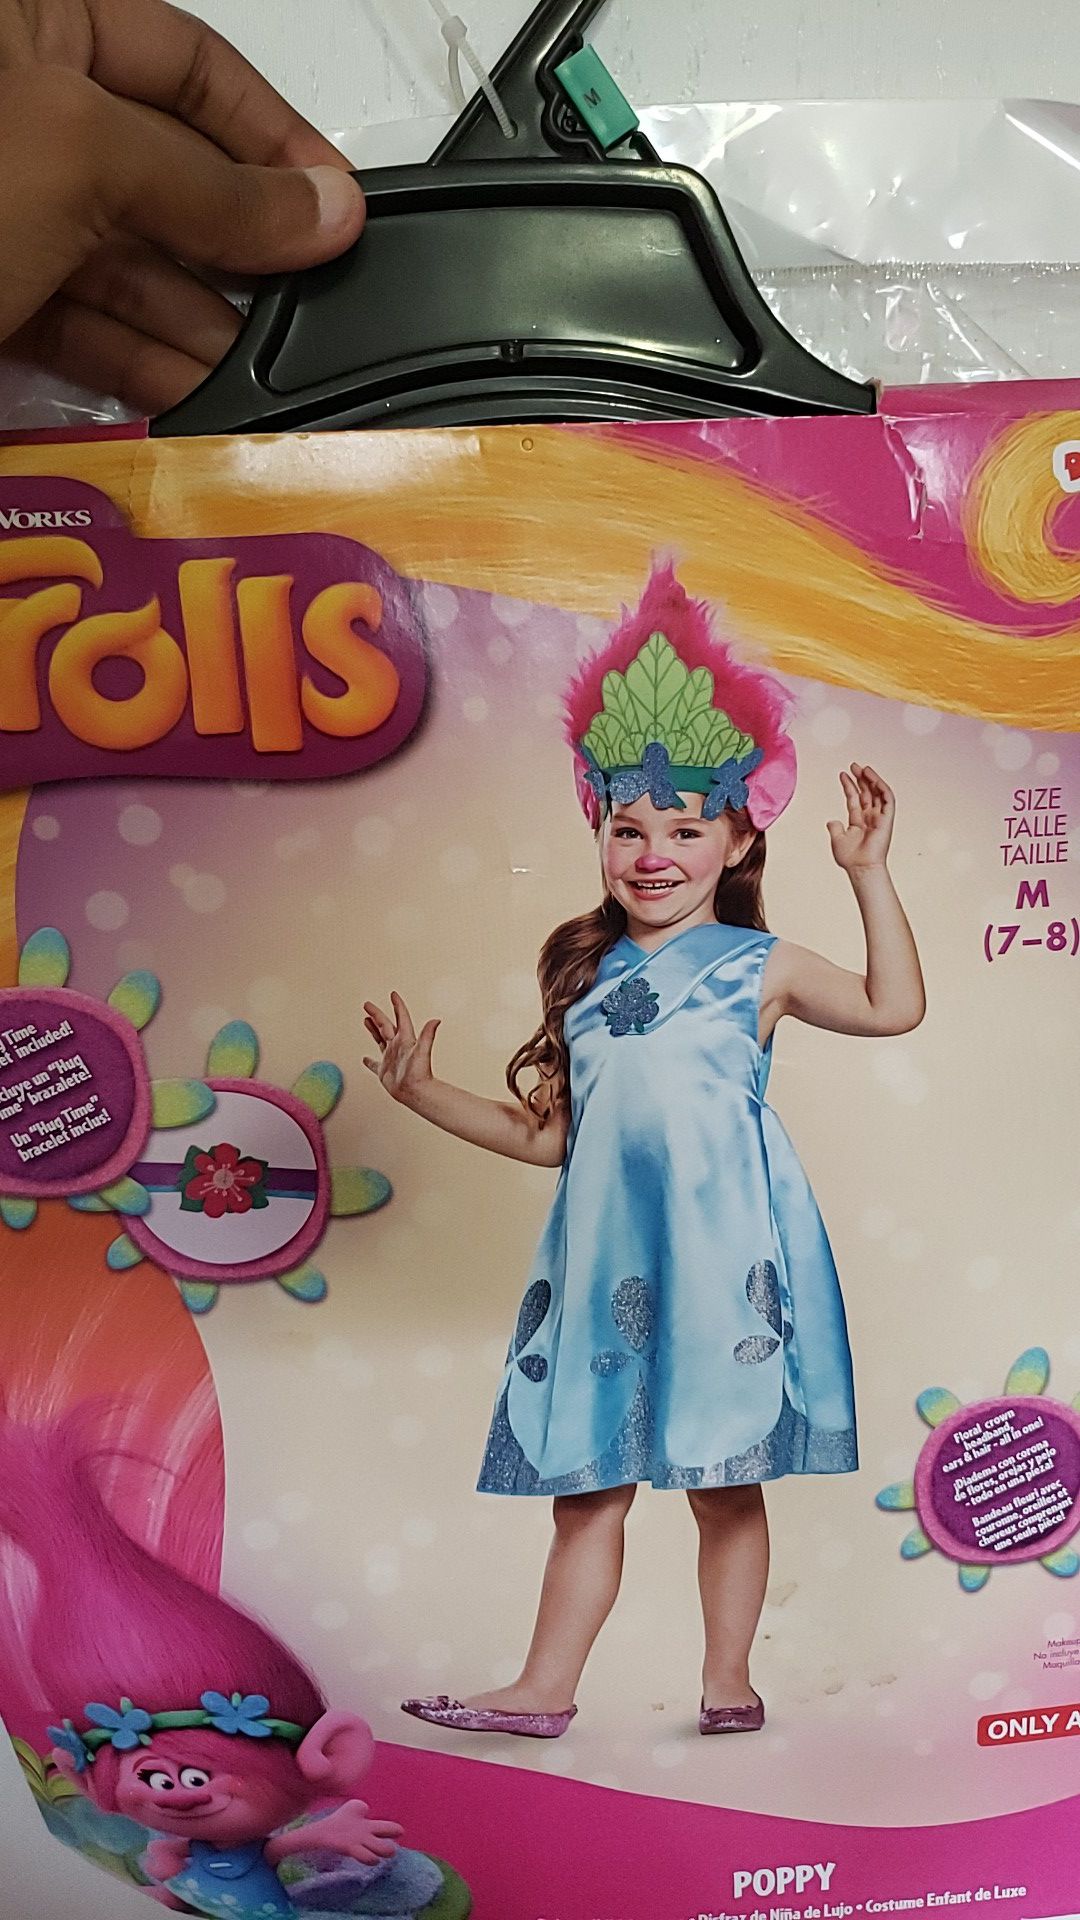 Halloween Costume New poppy trolls size 7